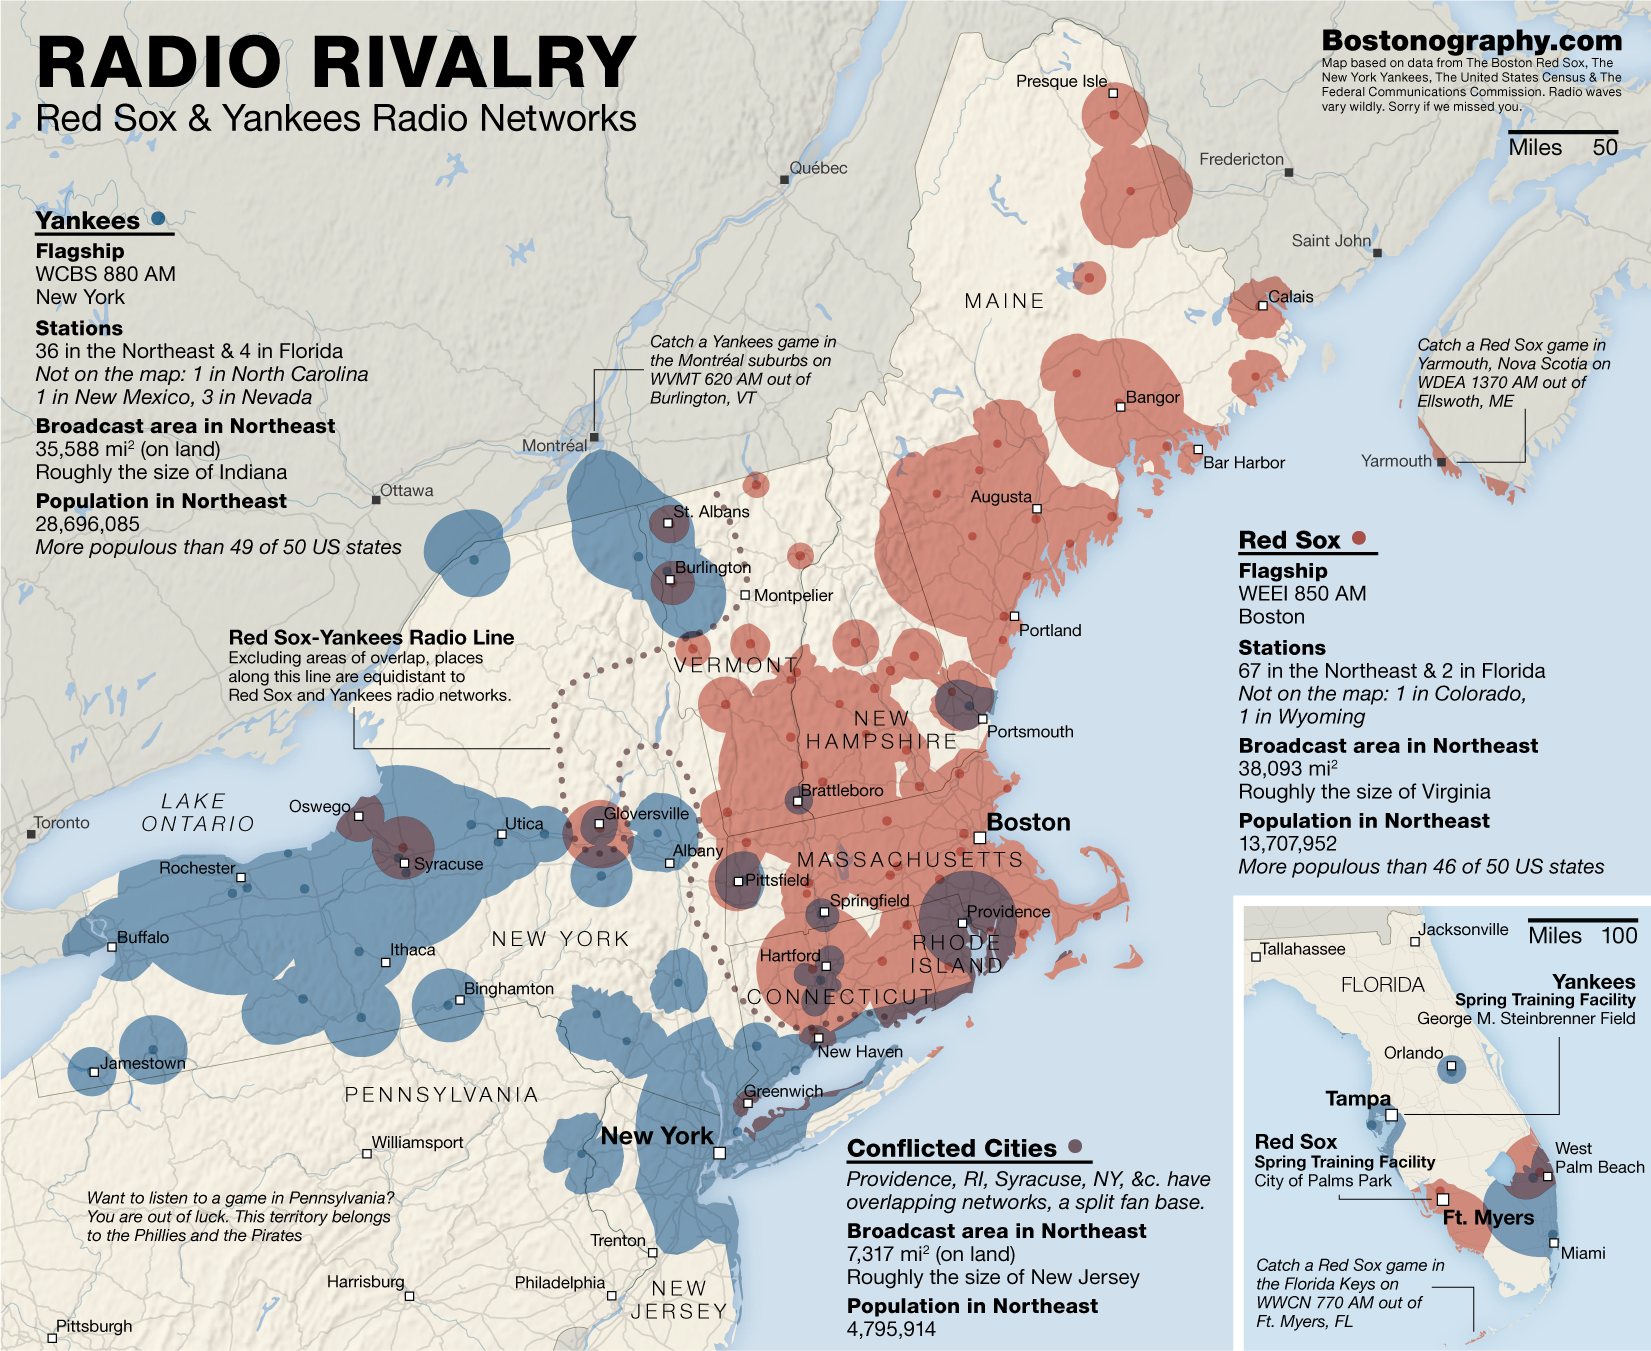 More on Radio Maps Bostonography